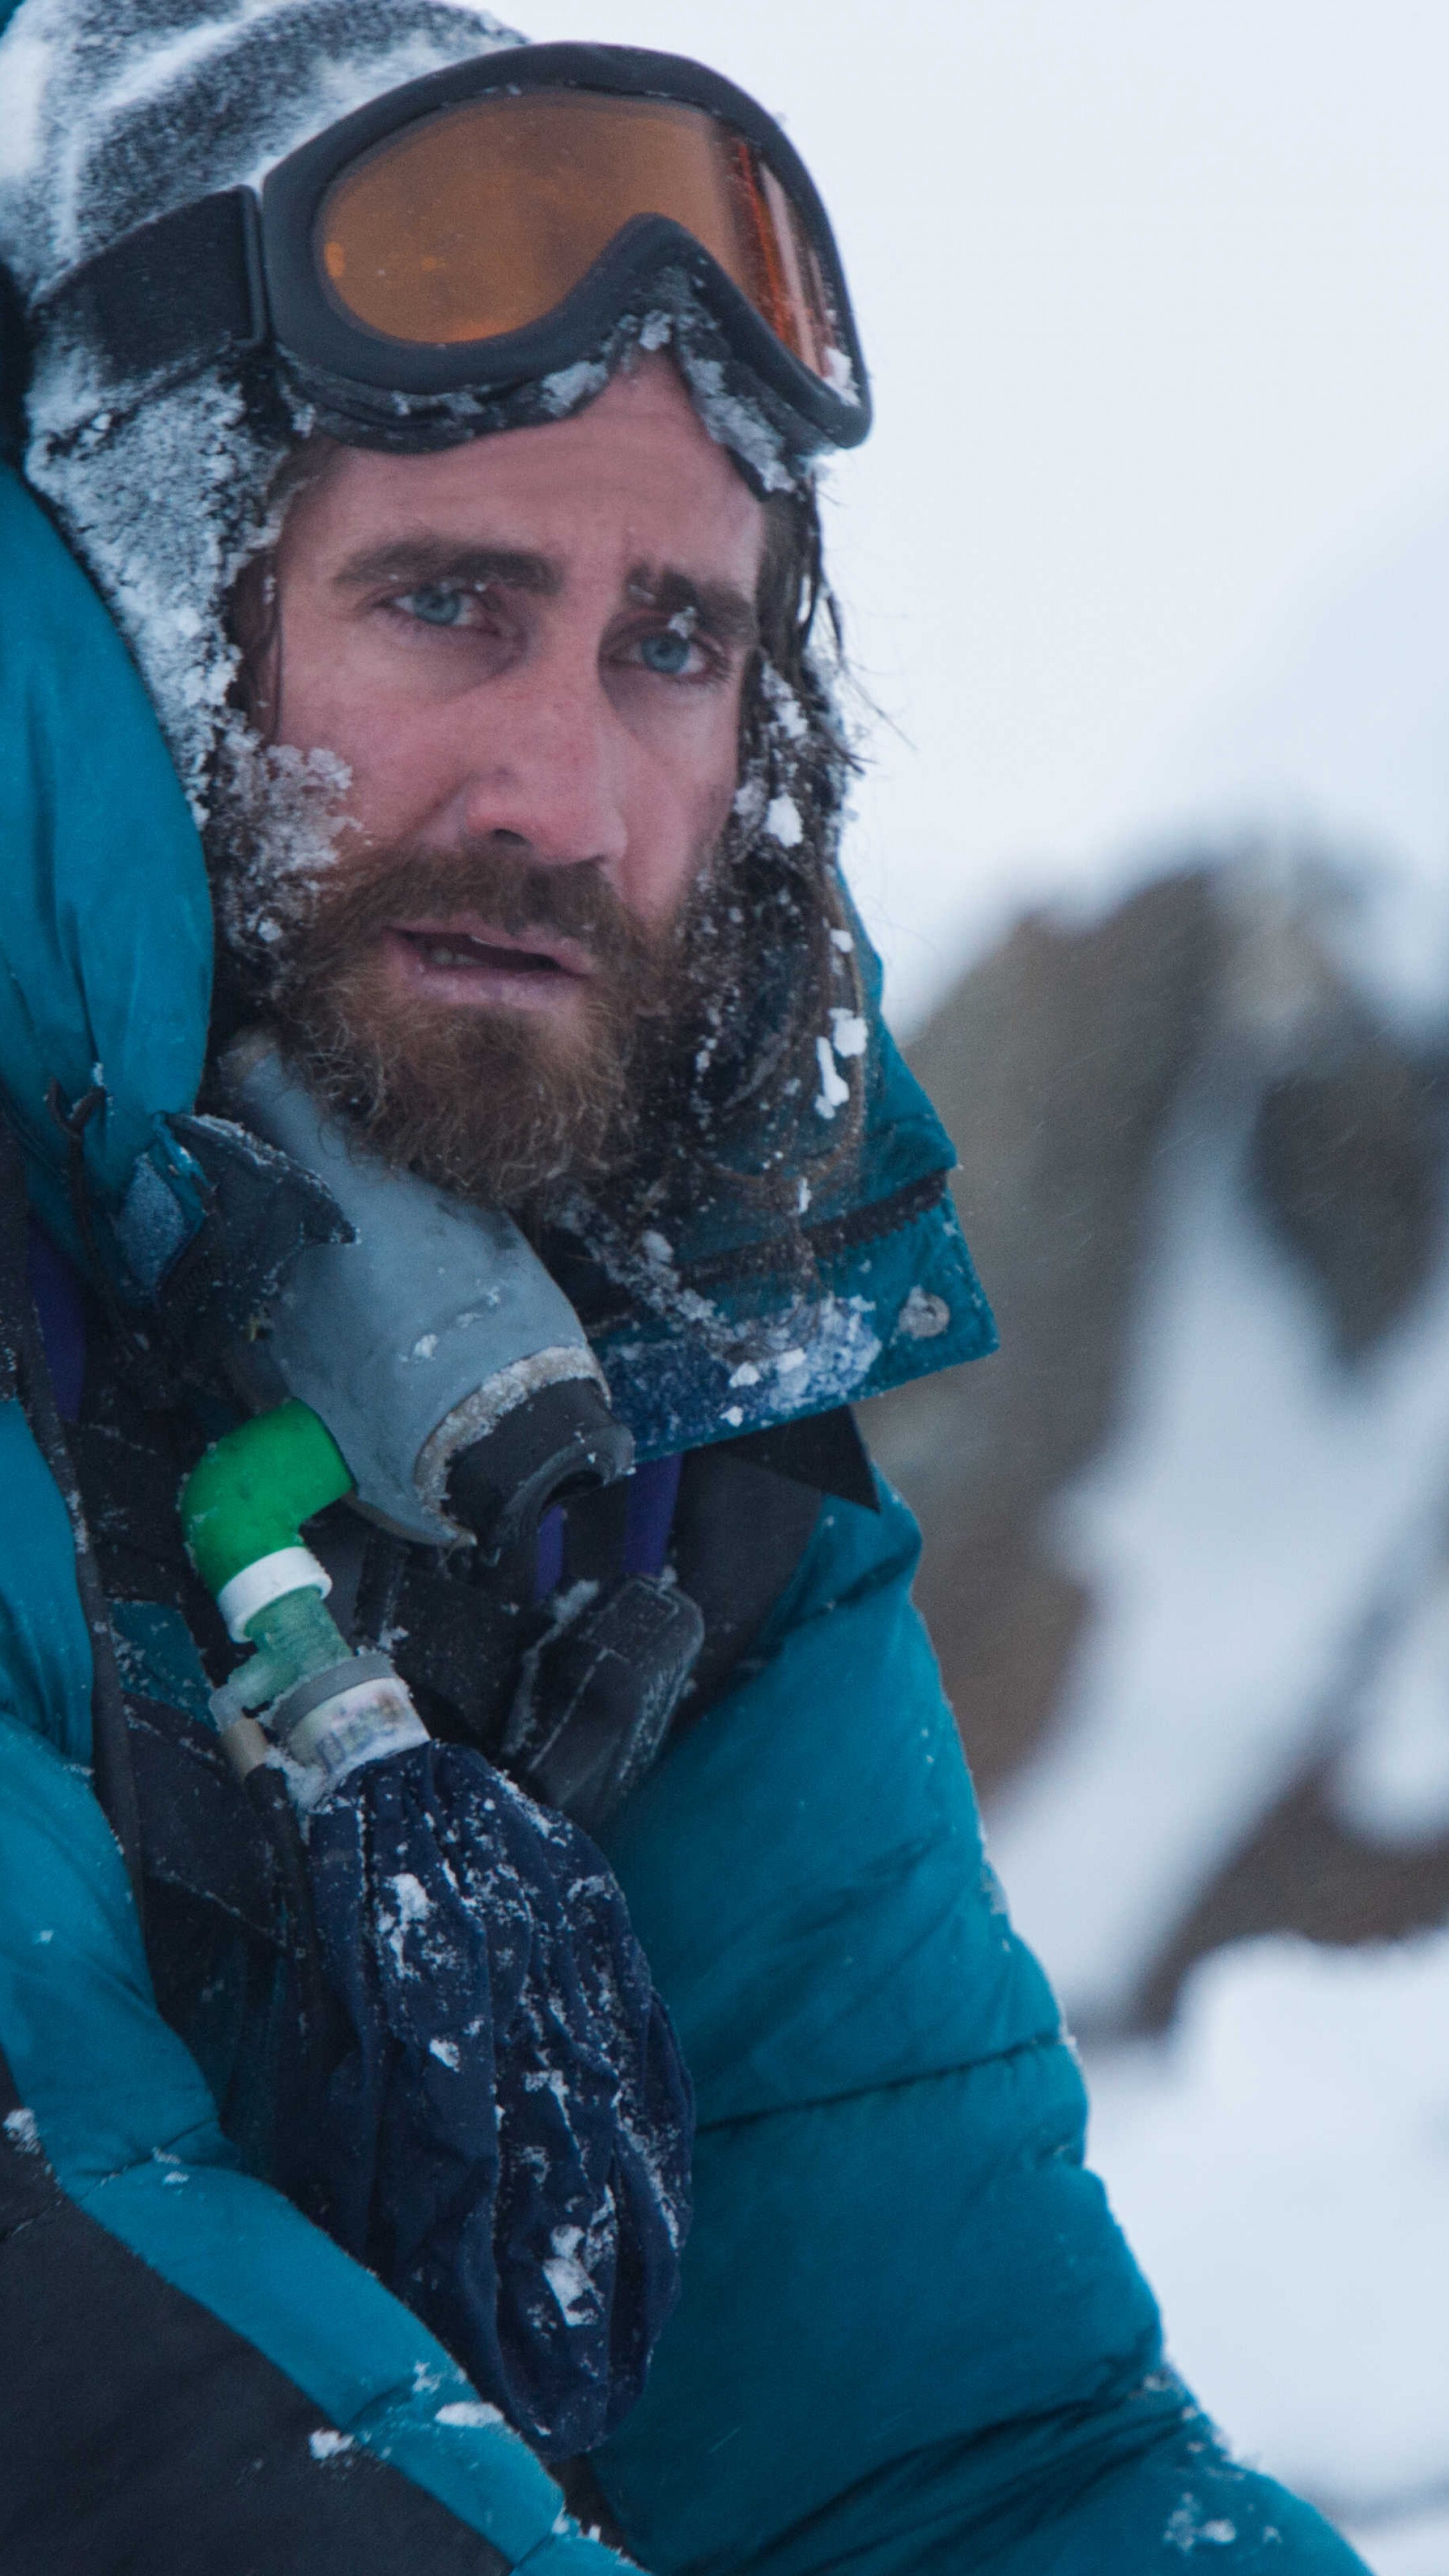 Everest (Movie 2015): Jake Gyllenhaal as Scott Fischer, An American expedition group leader, Movie drama. 2160x3840 4K Wallpaper.